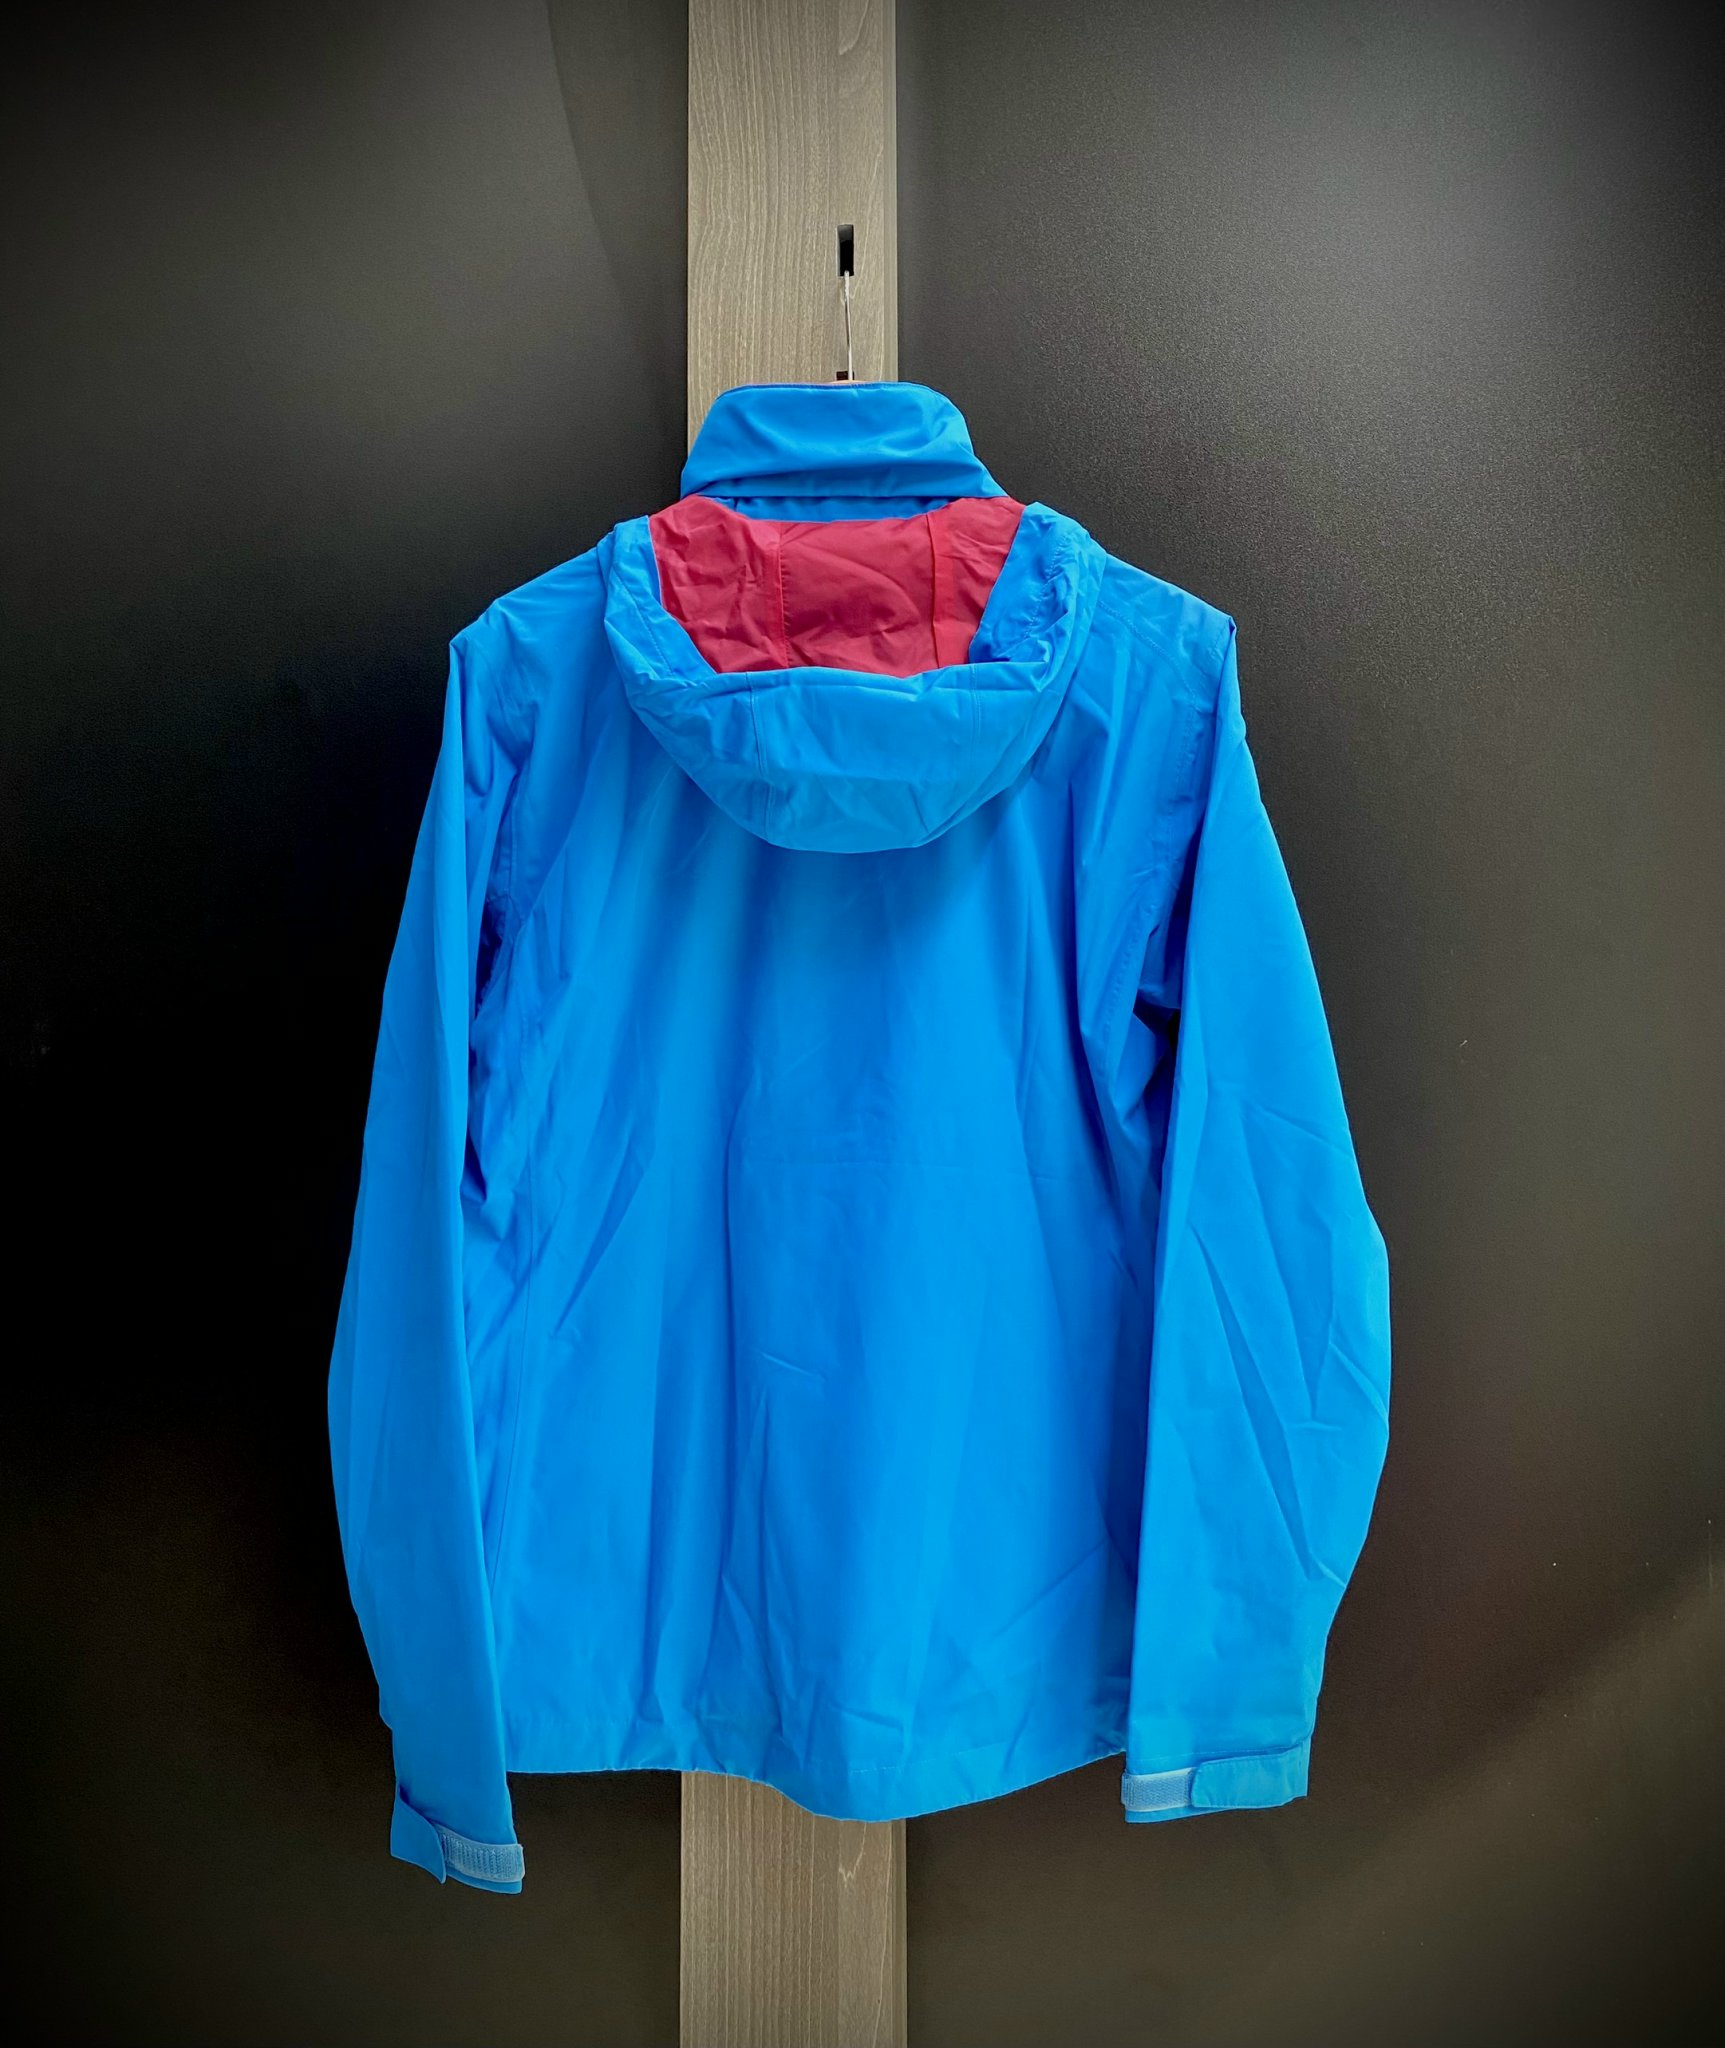 áo khoác chống thấm nước nữ Salomon ELEMENTAL AD JACKET W BL - L37500900